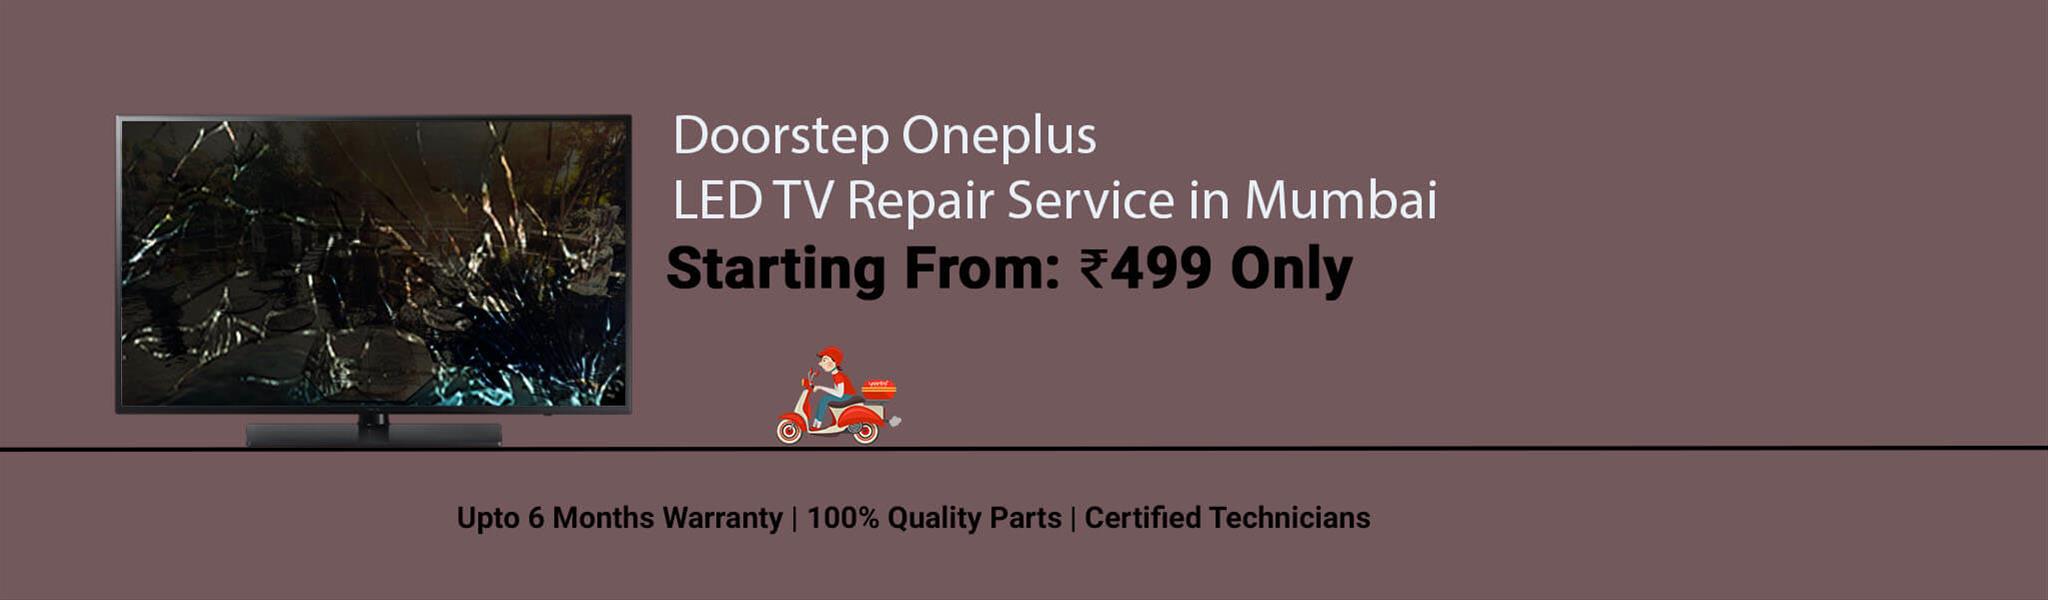 oneplus-tv-repair-in-mumbai.jpg